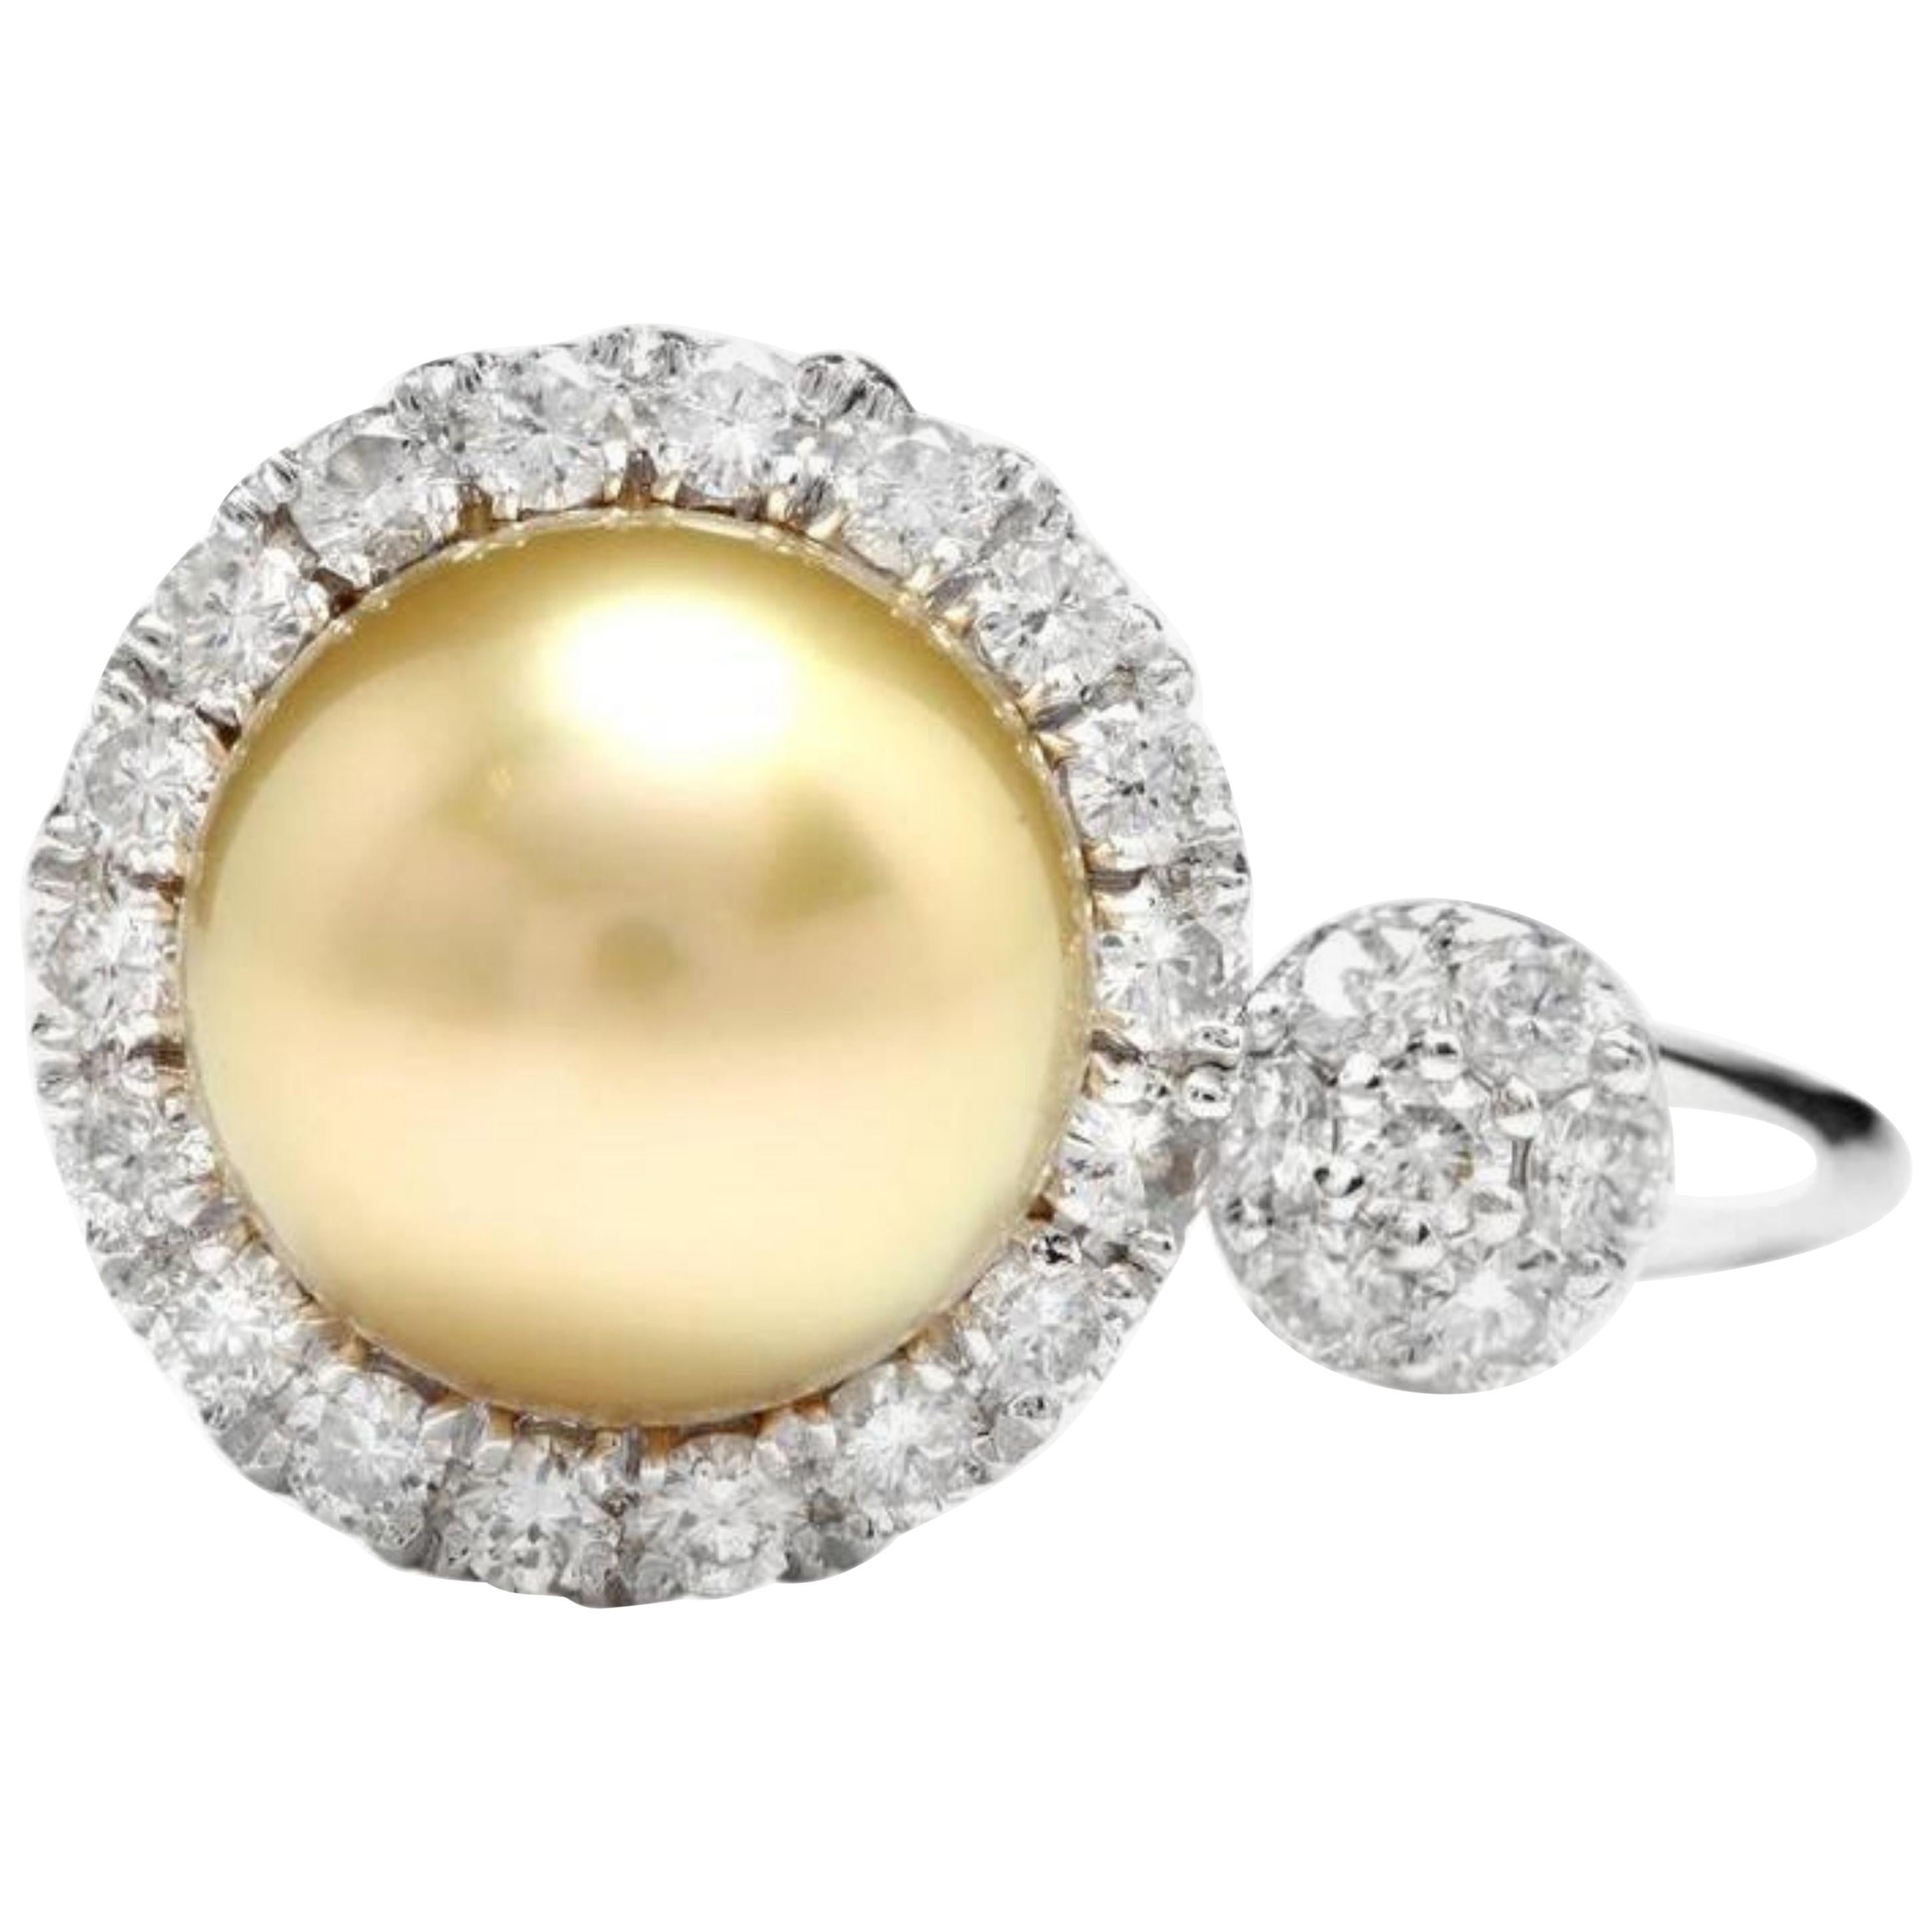 Splendid Natural South Sea Pearl and Diamond 14 Karat Solid White Gold Ring